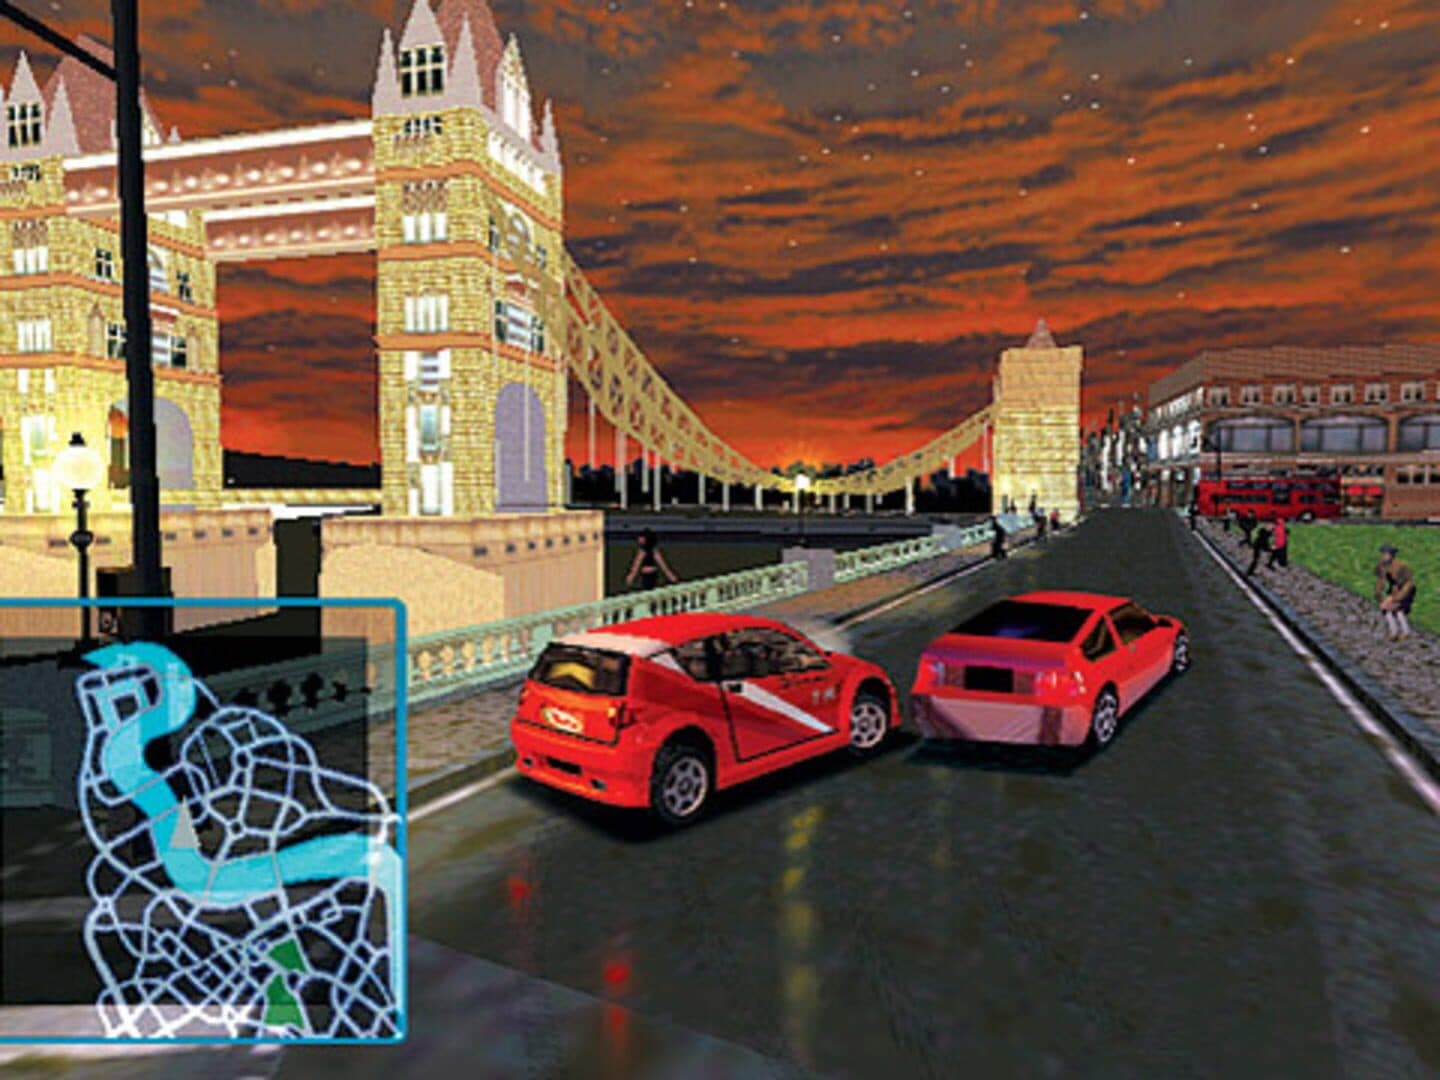 Midnight Club: Street Racing Image